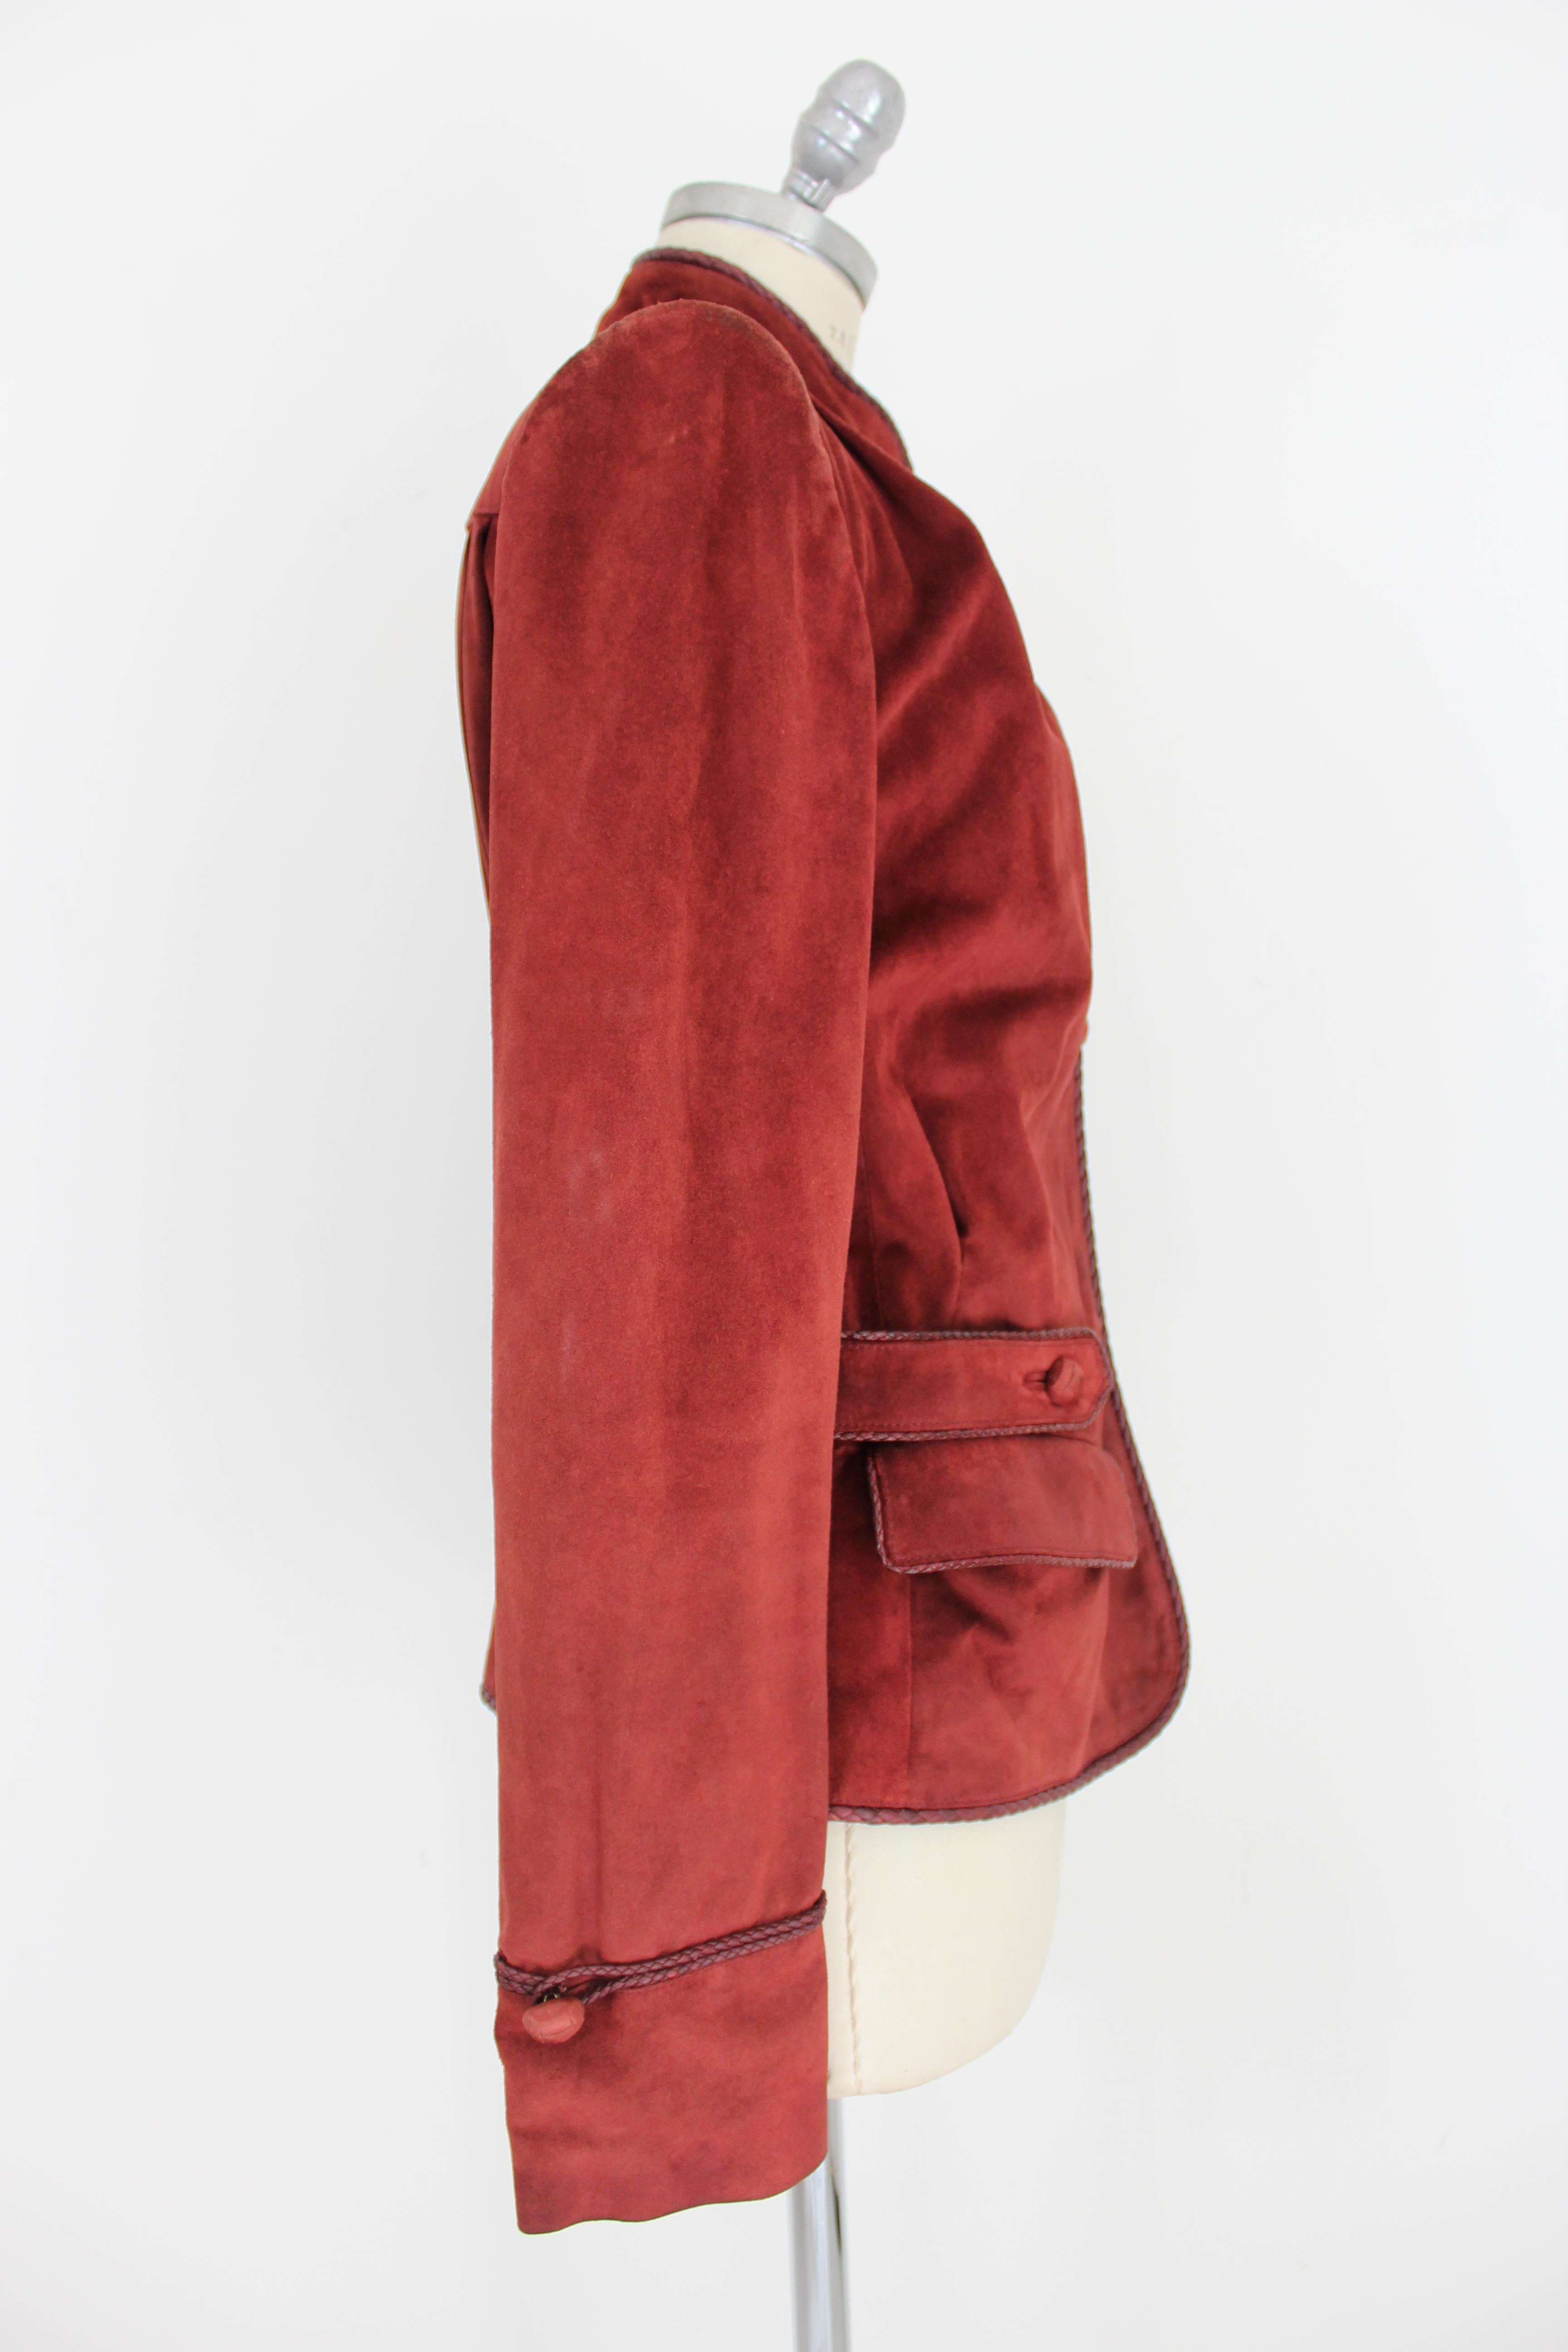 Red Yves Saint Laurent Rive Gauche Burgundy Leather Jacket 2000s Mandarin Collar